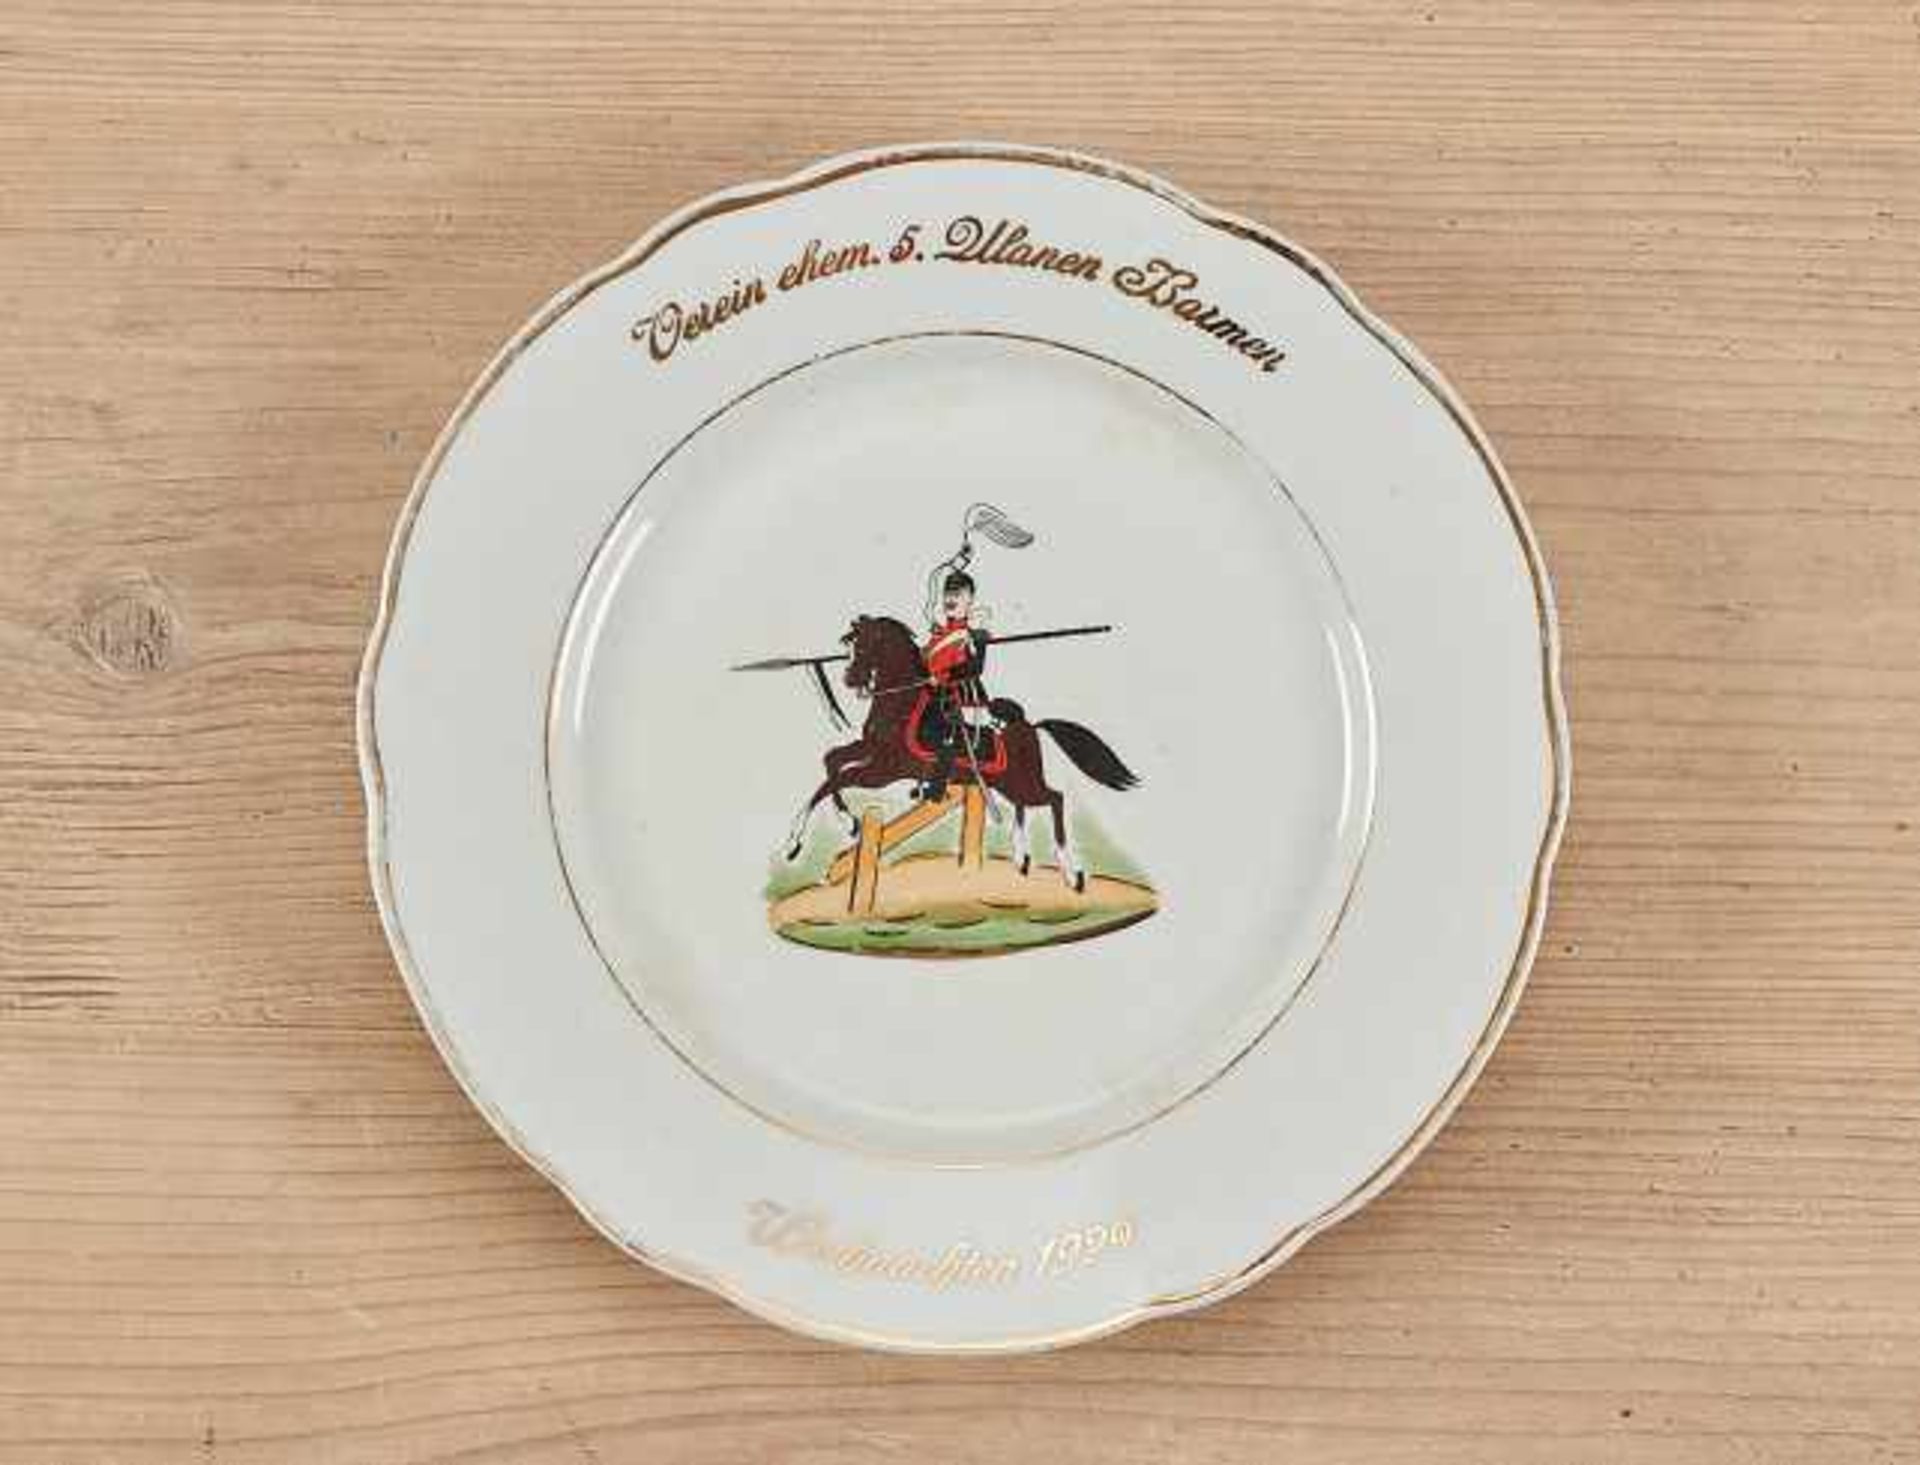 Weimarer Republik - Reichswehr : Ulan Association Commemorative Plate.Plate features stylized